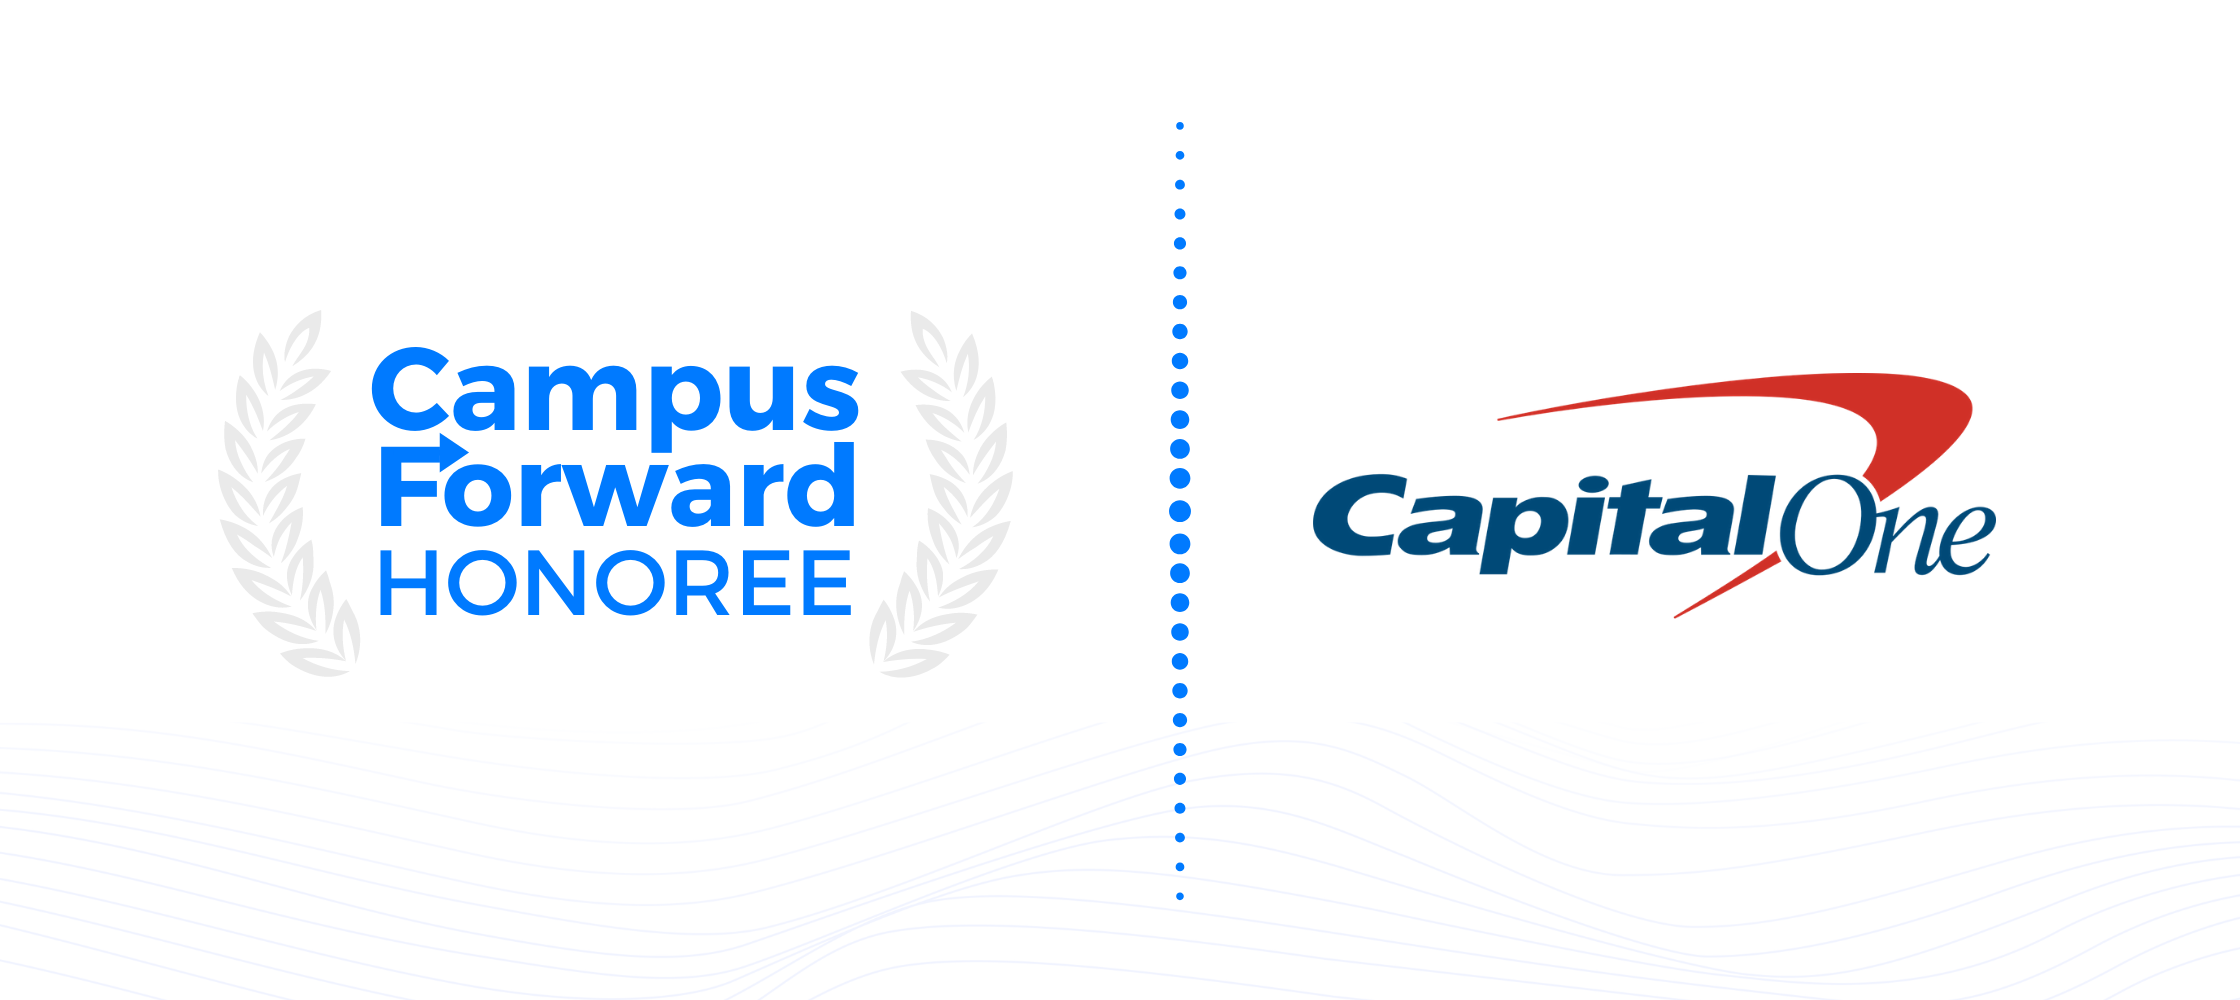 Campus Forward Honoree - Capital One